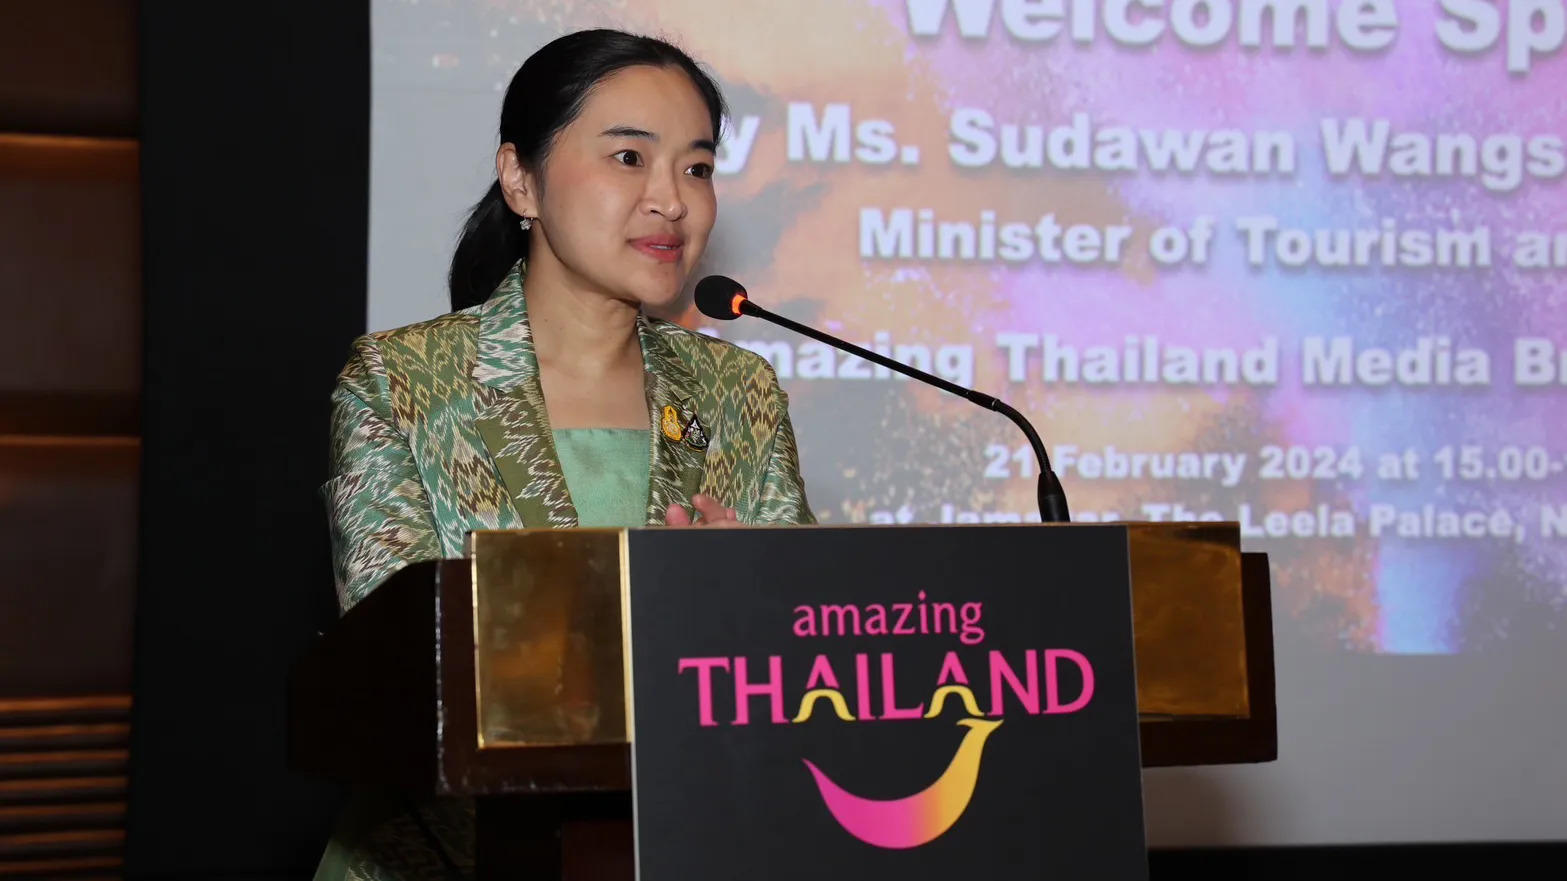 Sudawan Wangsuphakijkosol, Minister of Tourism and Sports, Thailand